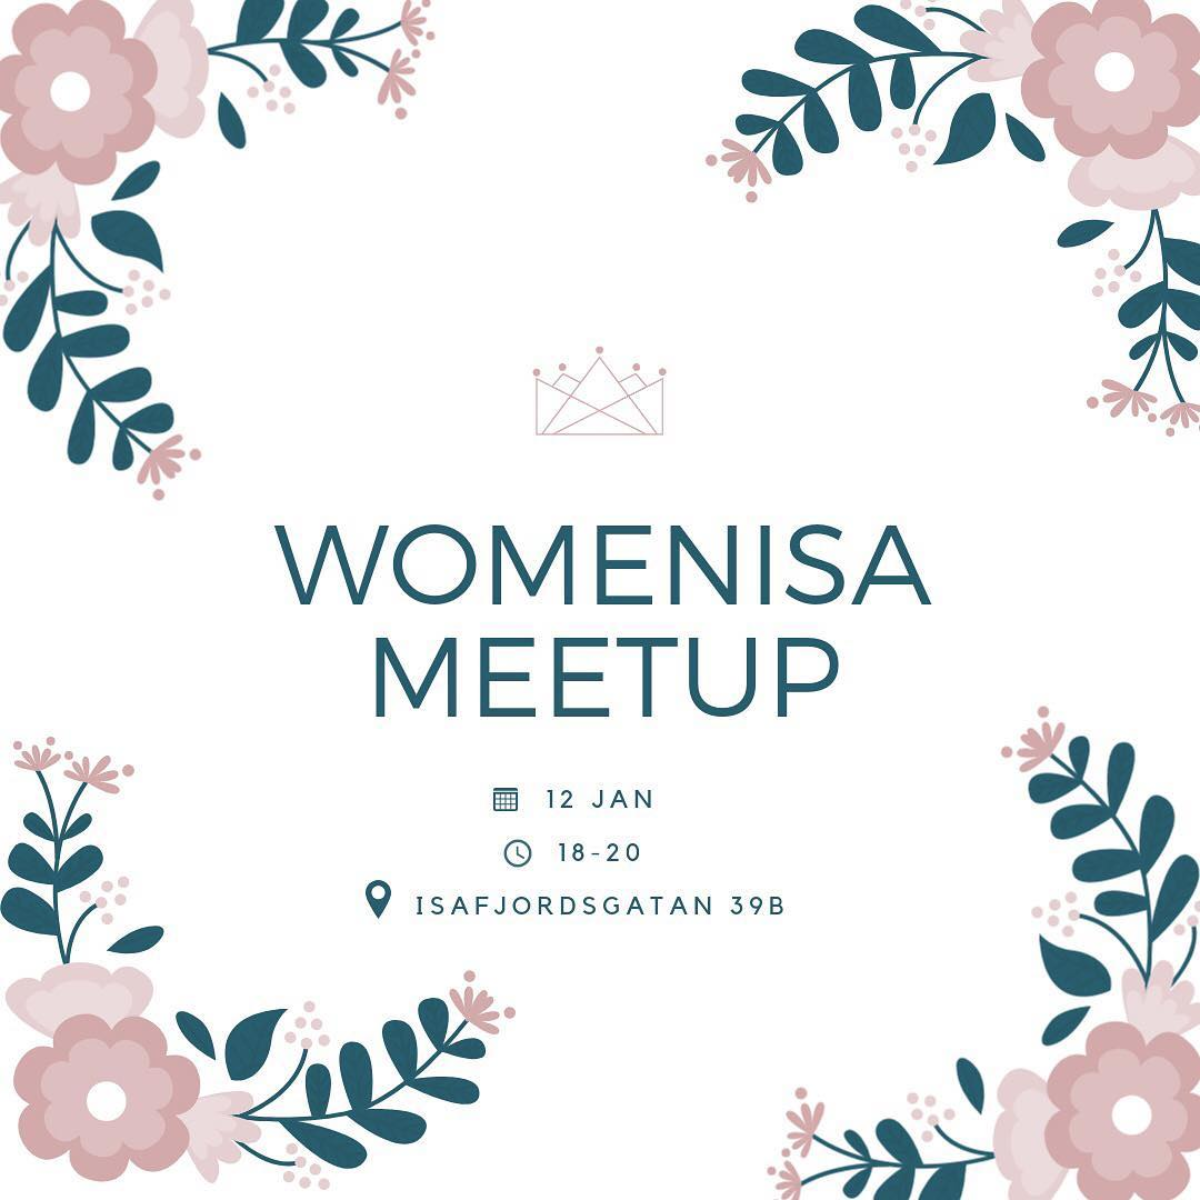 Womenisa meetup